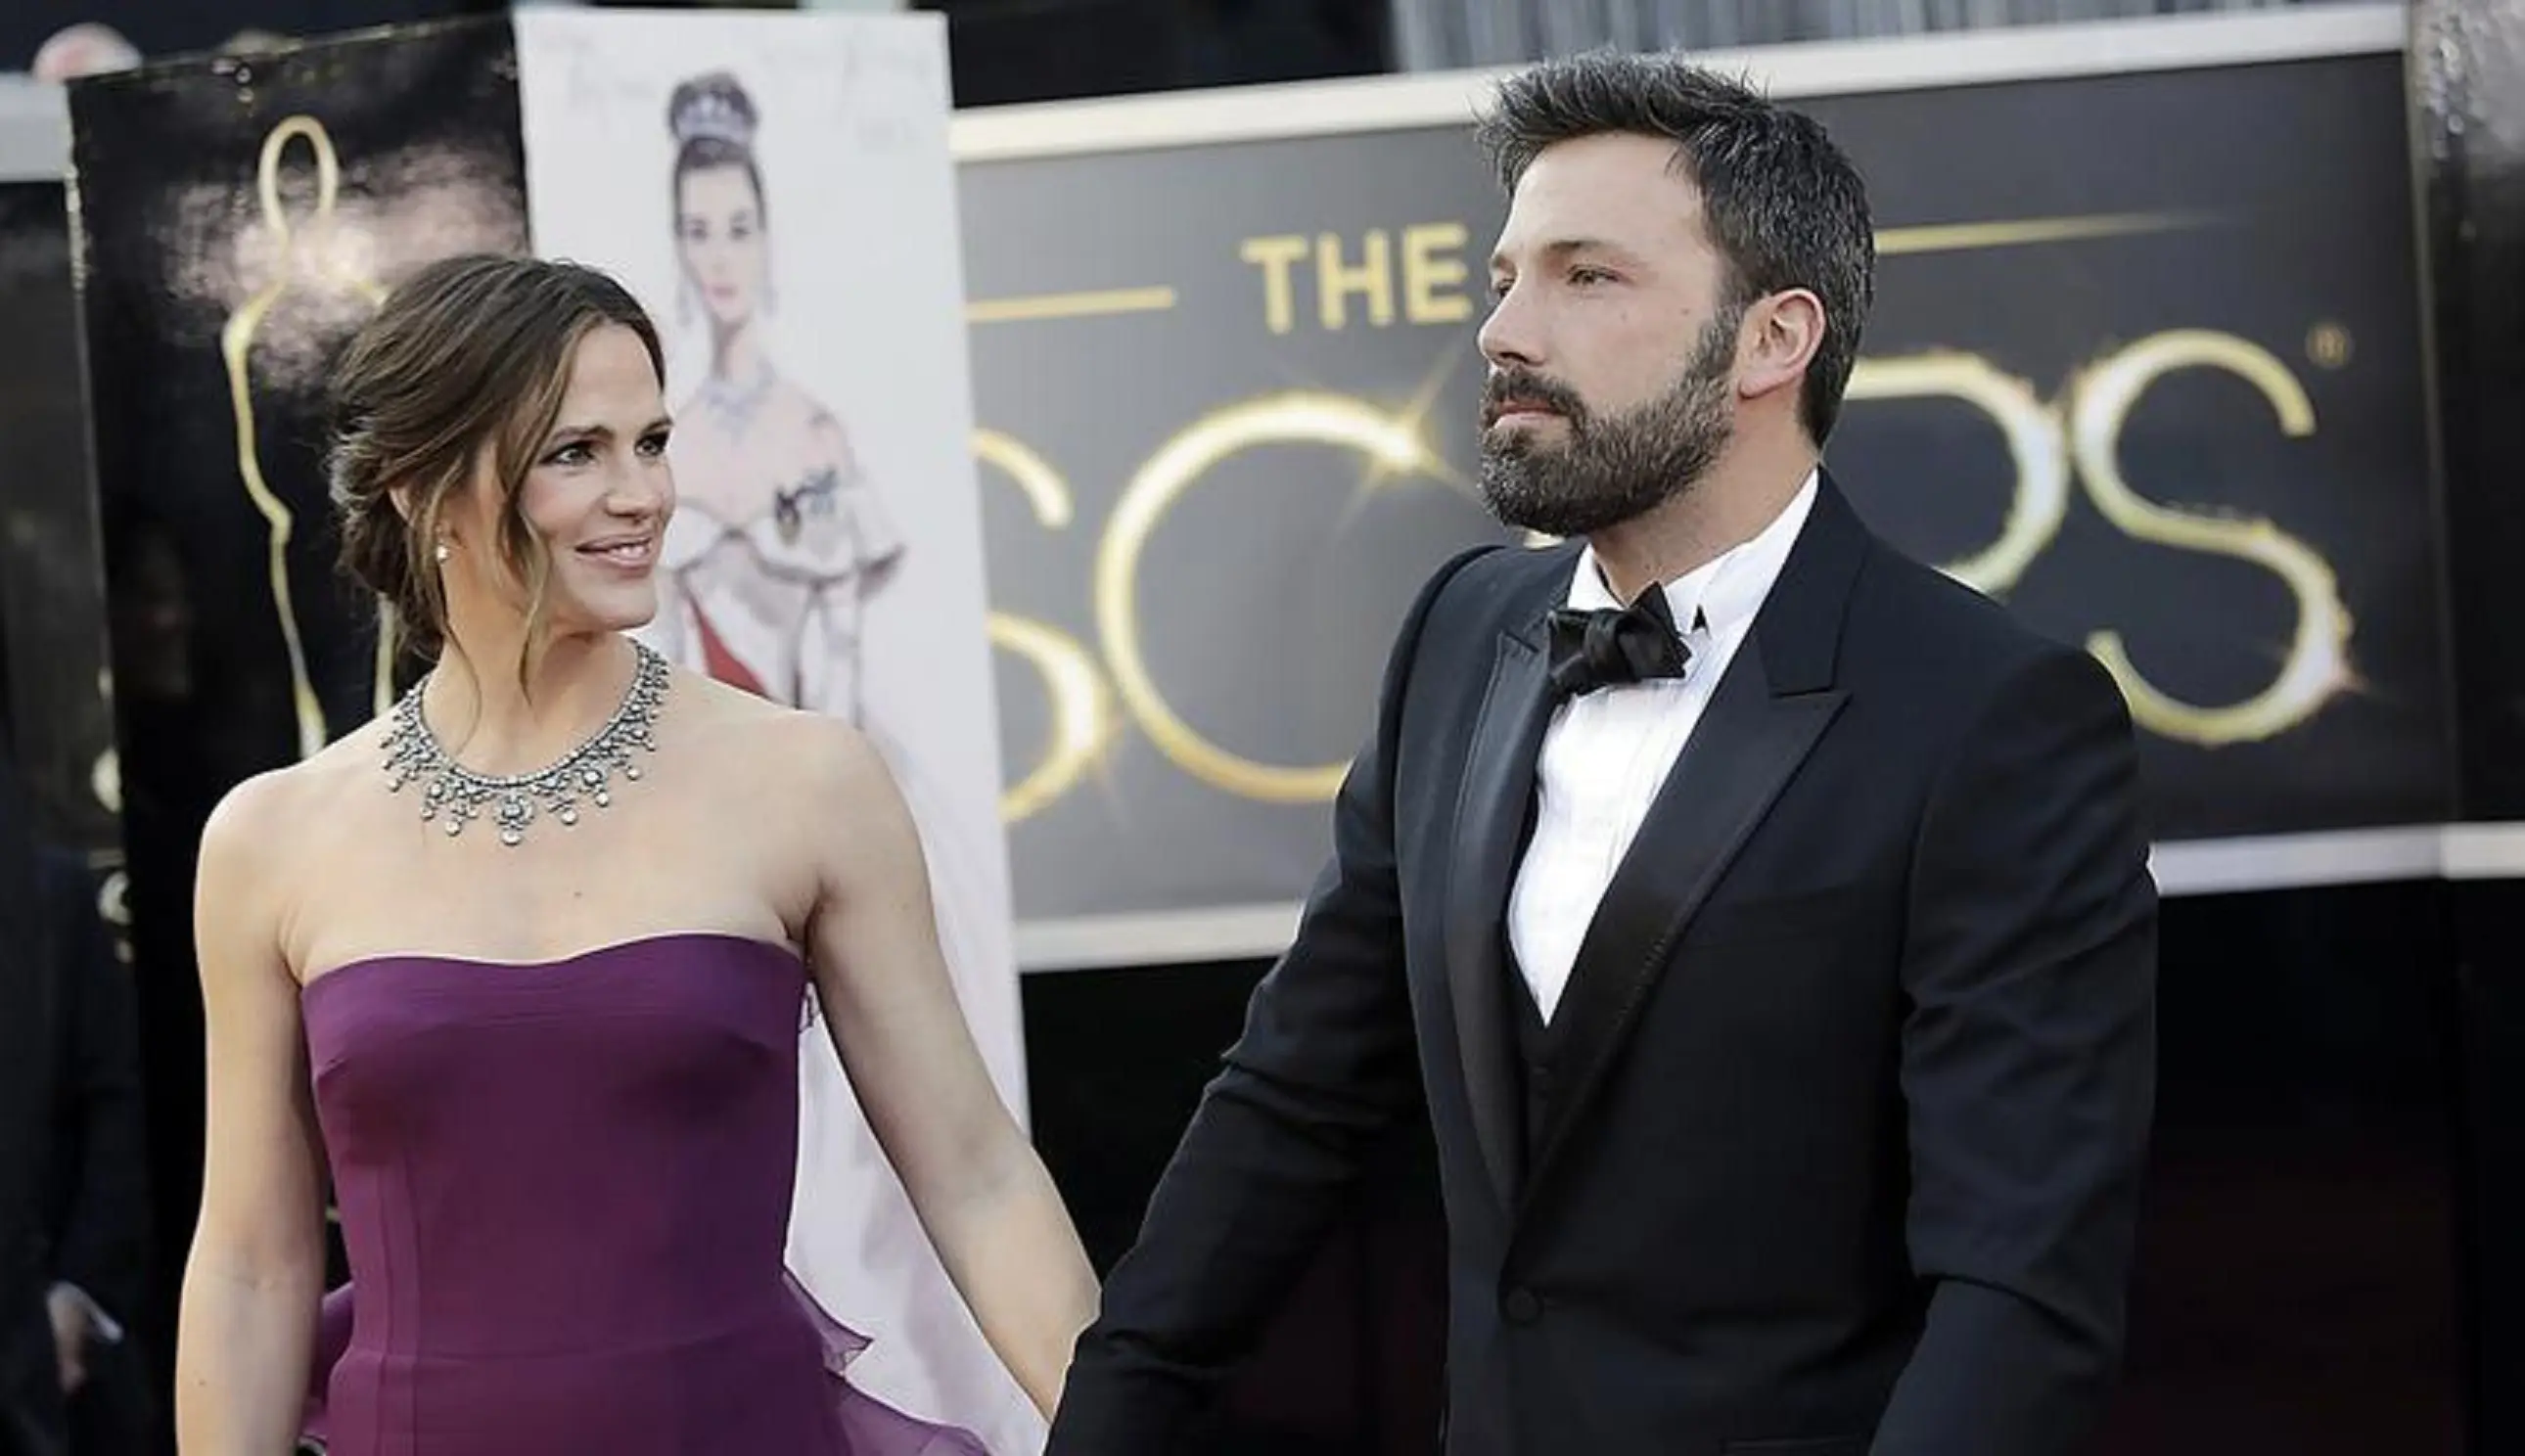 Momen kebahagiaan Jennifer Garner dan Ben Affleck yang sempat terekam kamera saat menghadiri ajang penghargaan Oscar.